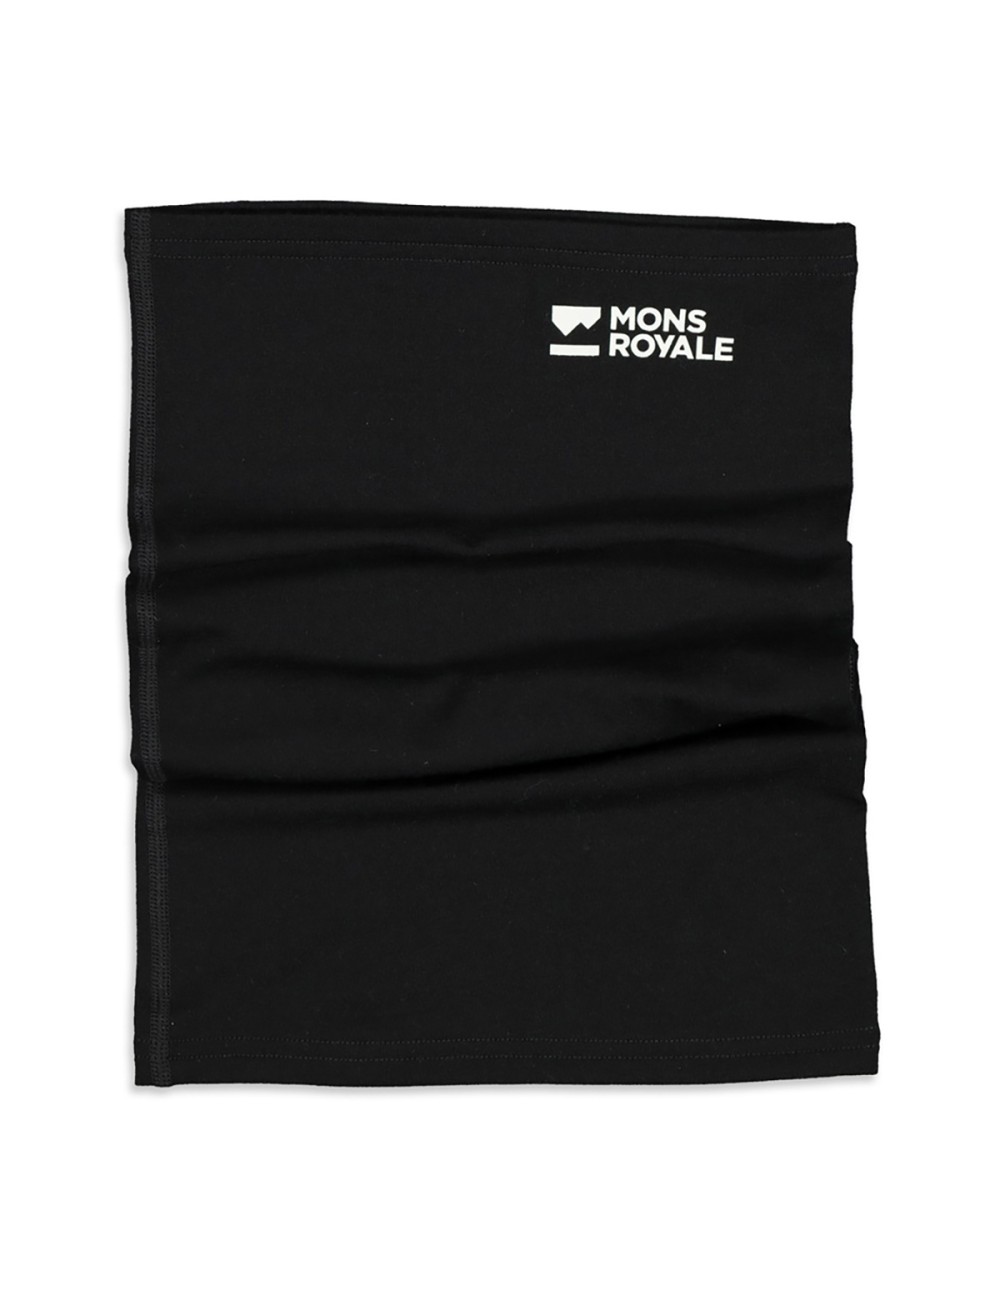 Mons Royale Daily Dose Neckwarmer - Black